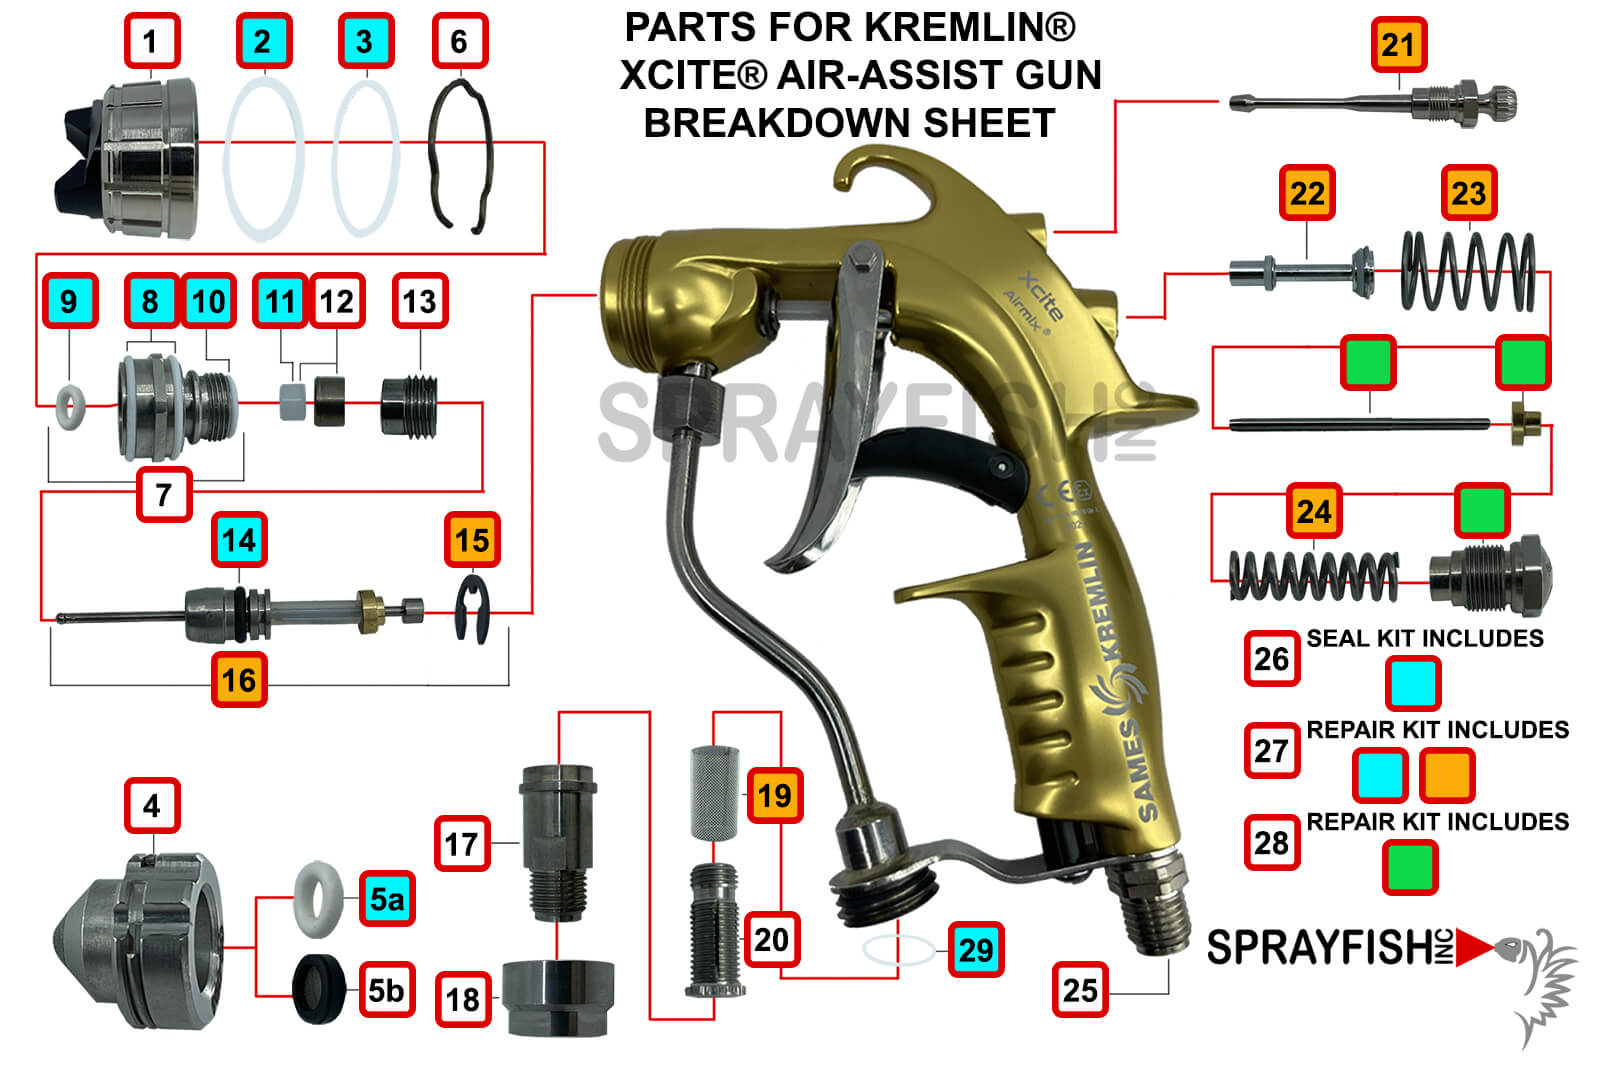 Sprayfish Spare Parts for Kremlin® ATX Automatic Gun Breakdown Sheet